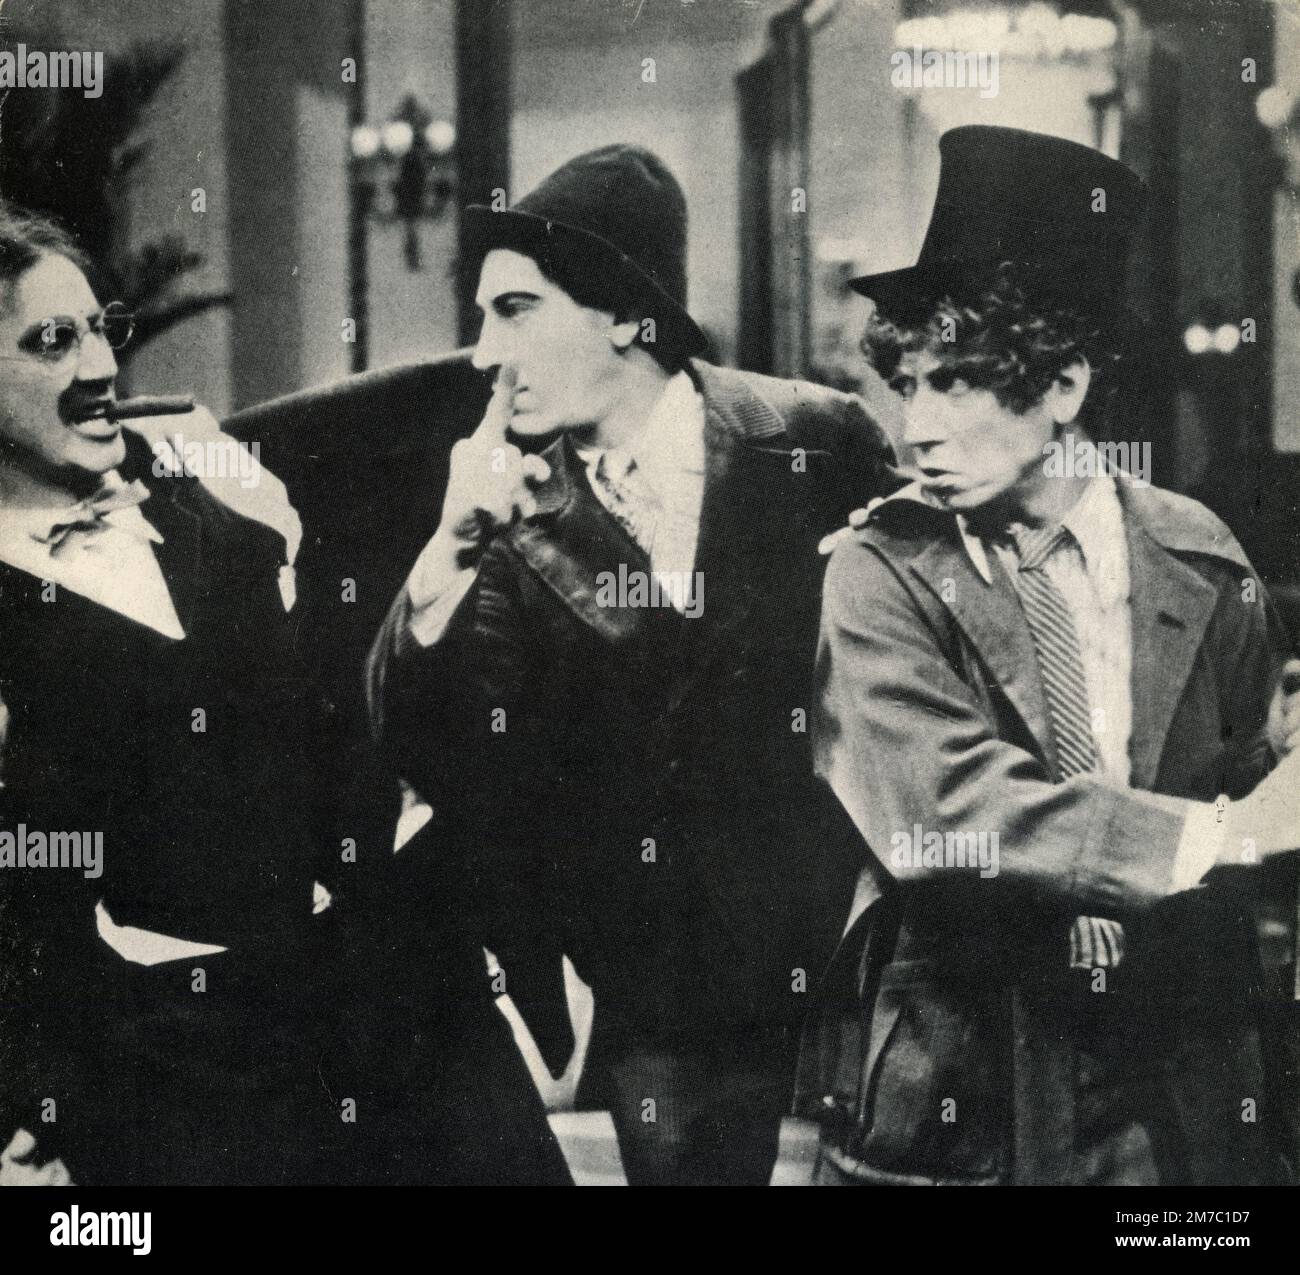 Groucho, Chico, and Harpo Marx in the movie The Cocoanuts, USA 1929 Stock Photo